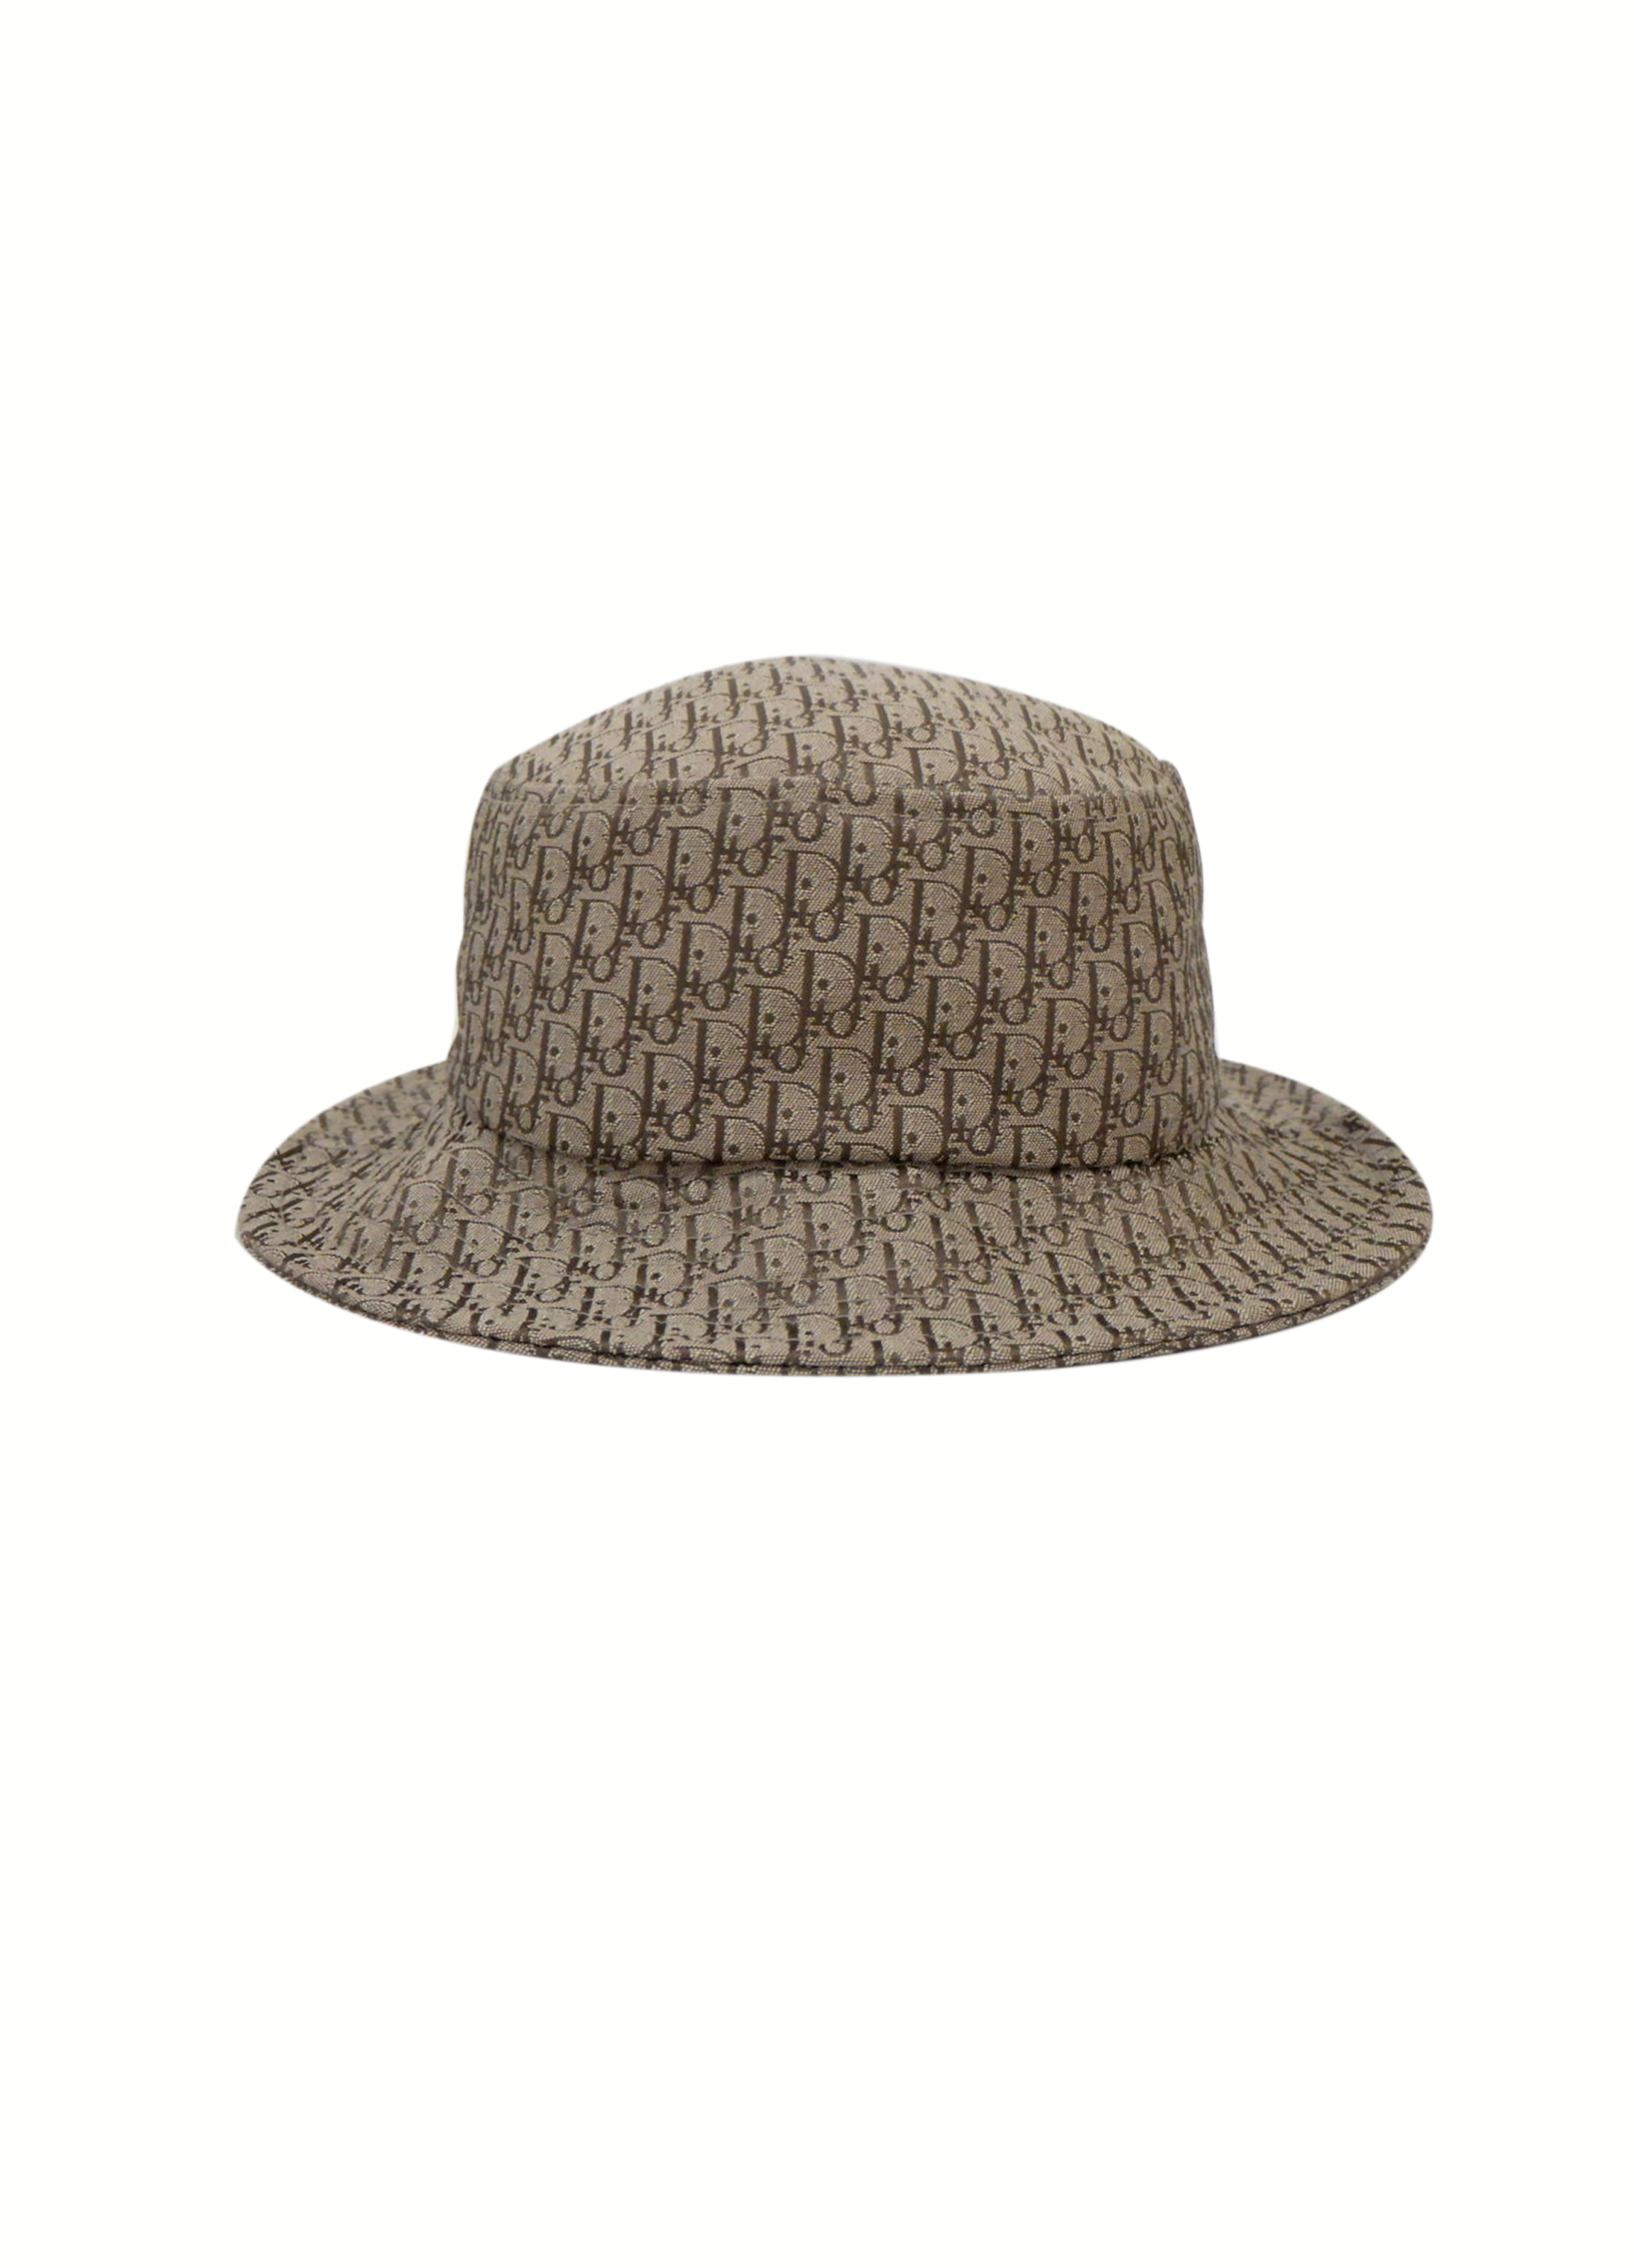 Christian Dior 2000s Brown Monogram Hat